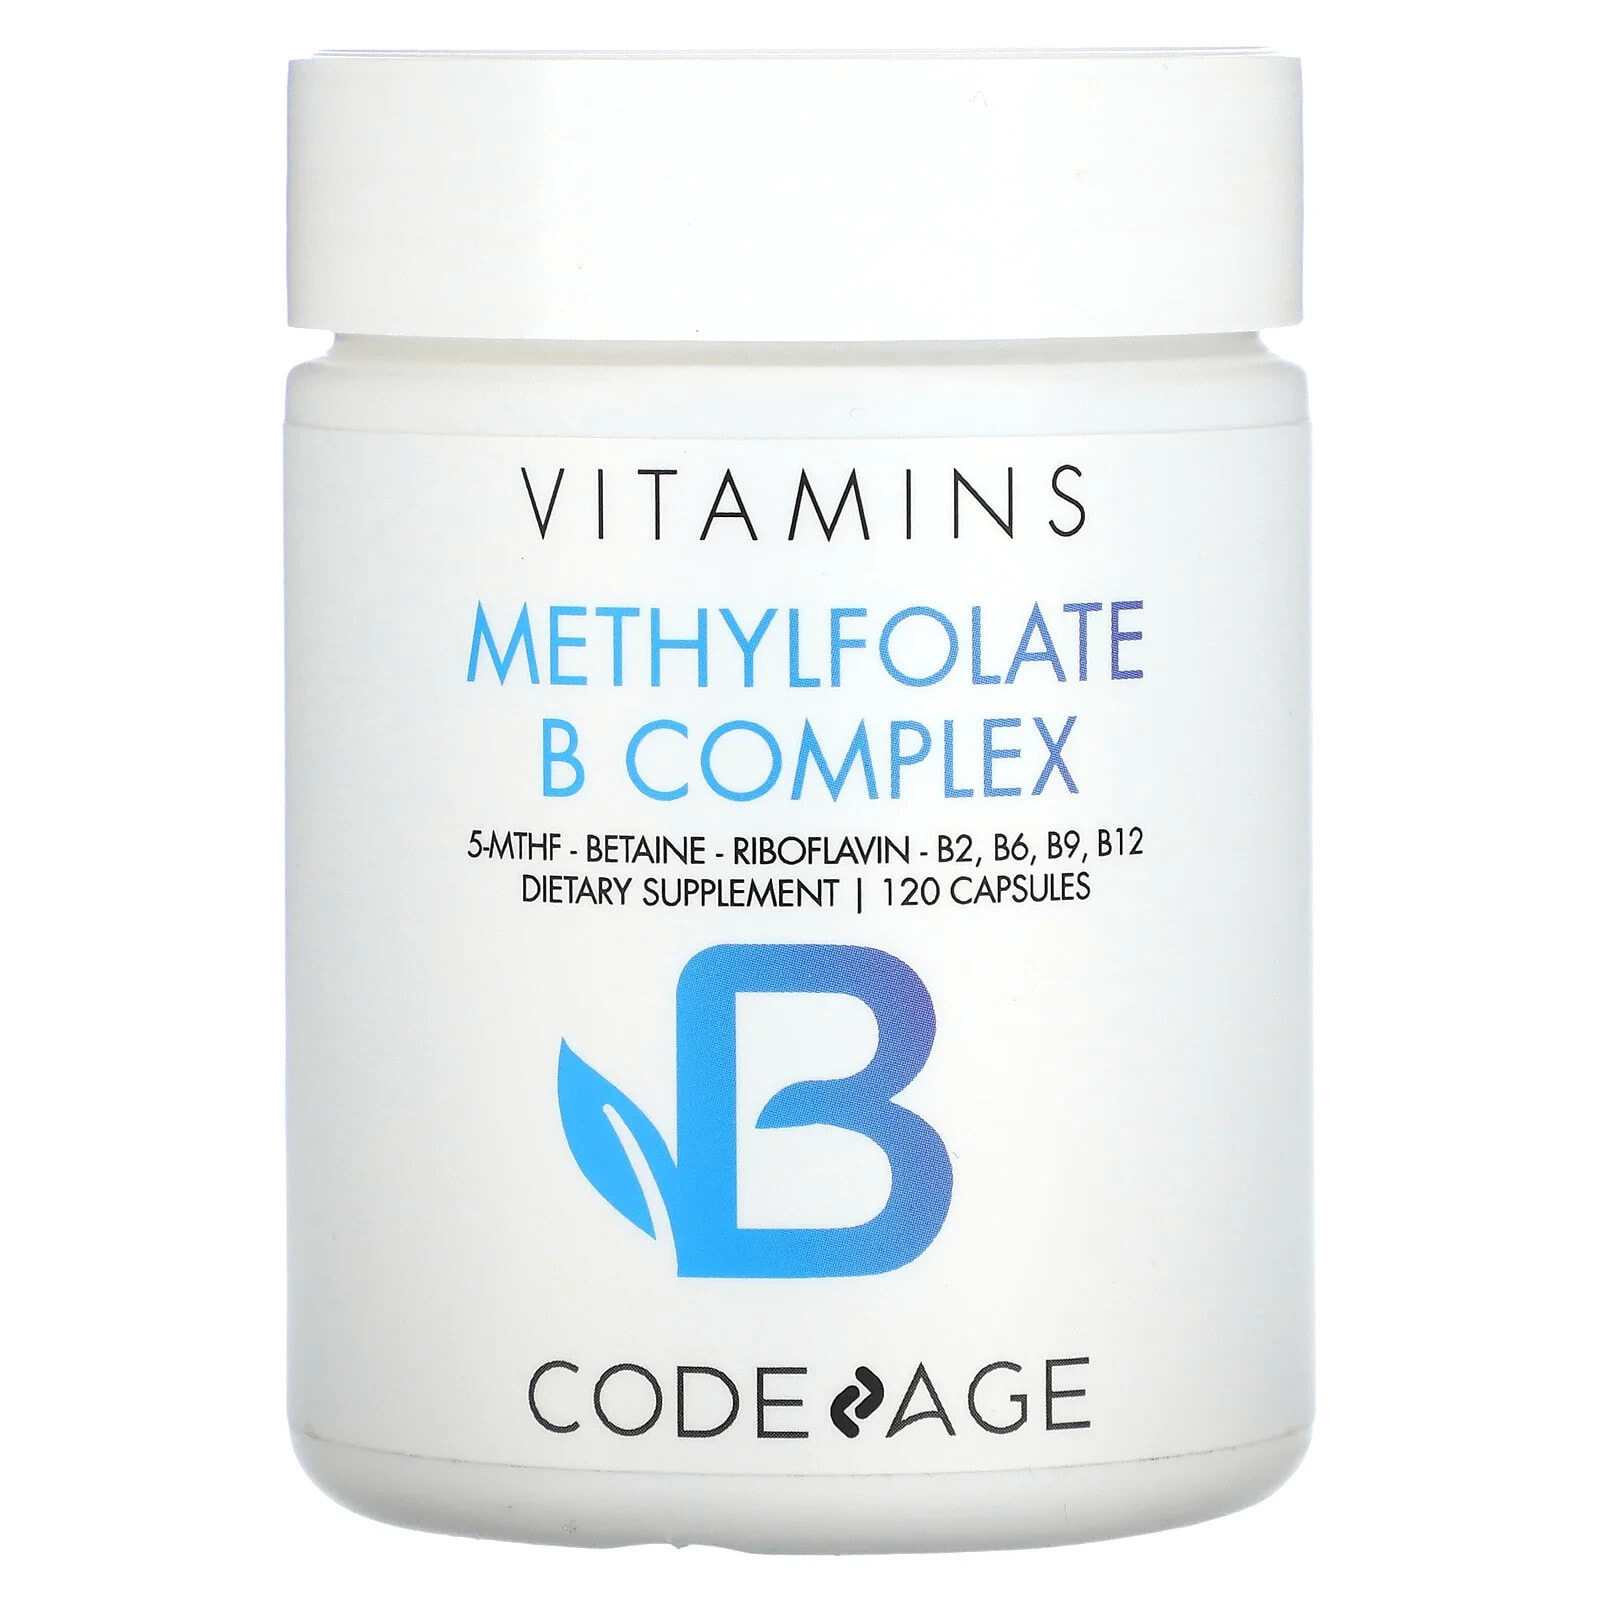 Vitamins, Methylfolate B Complex, 120 Capsules